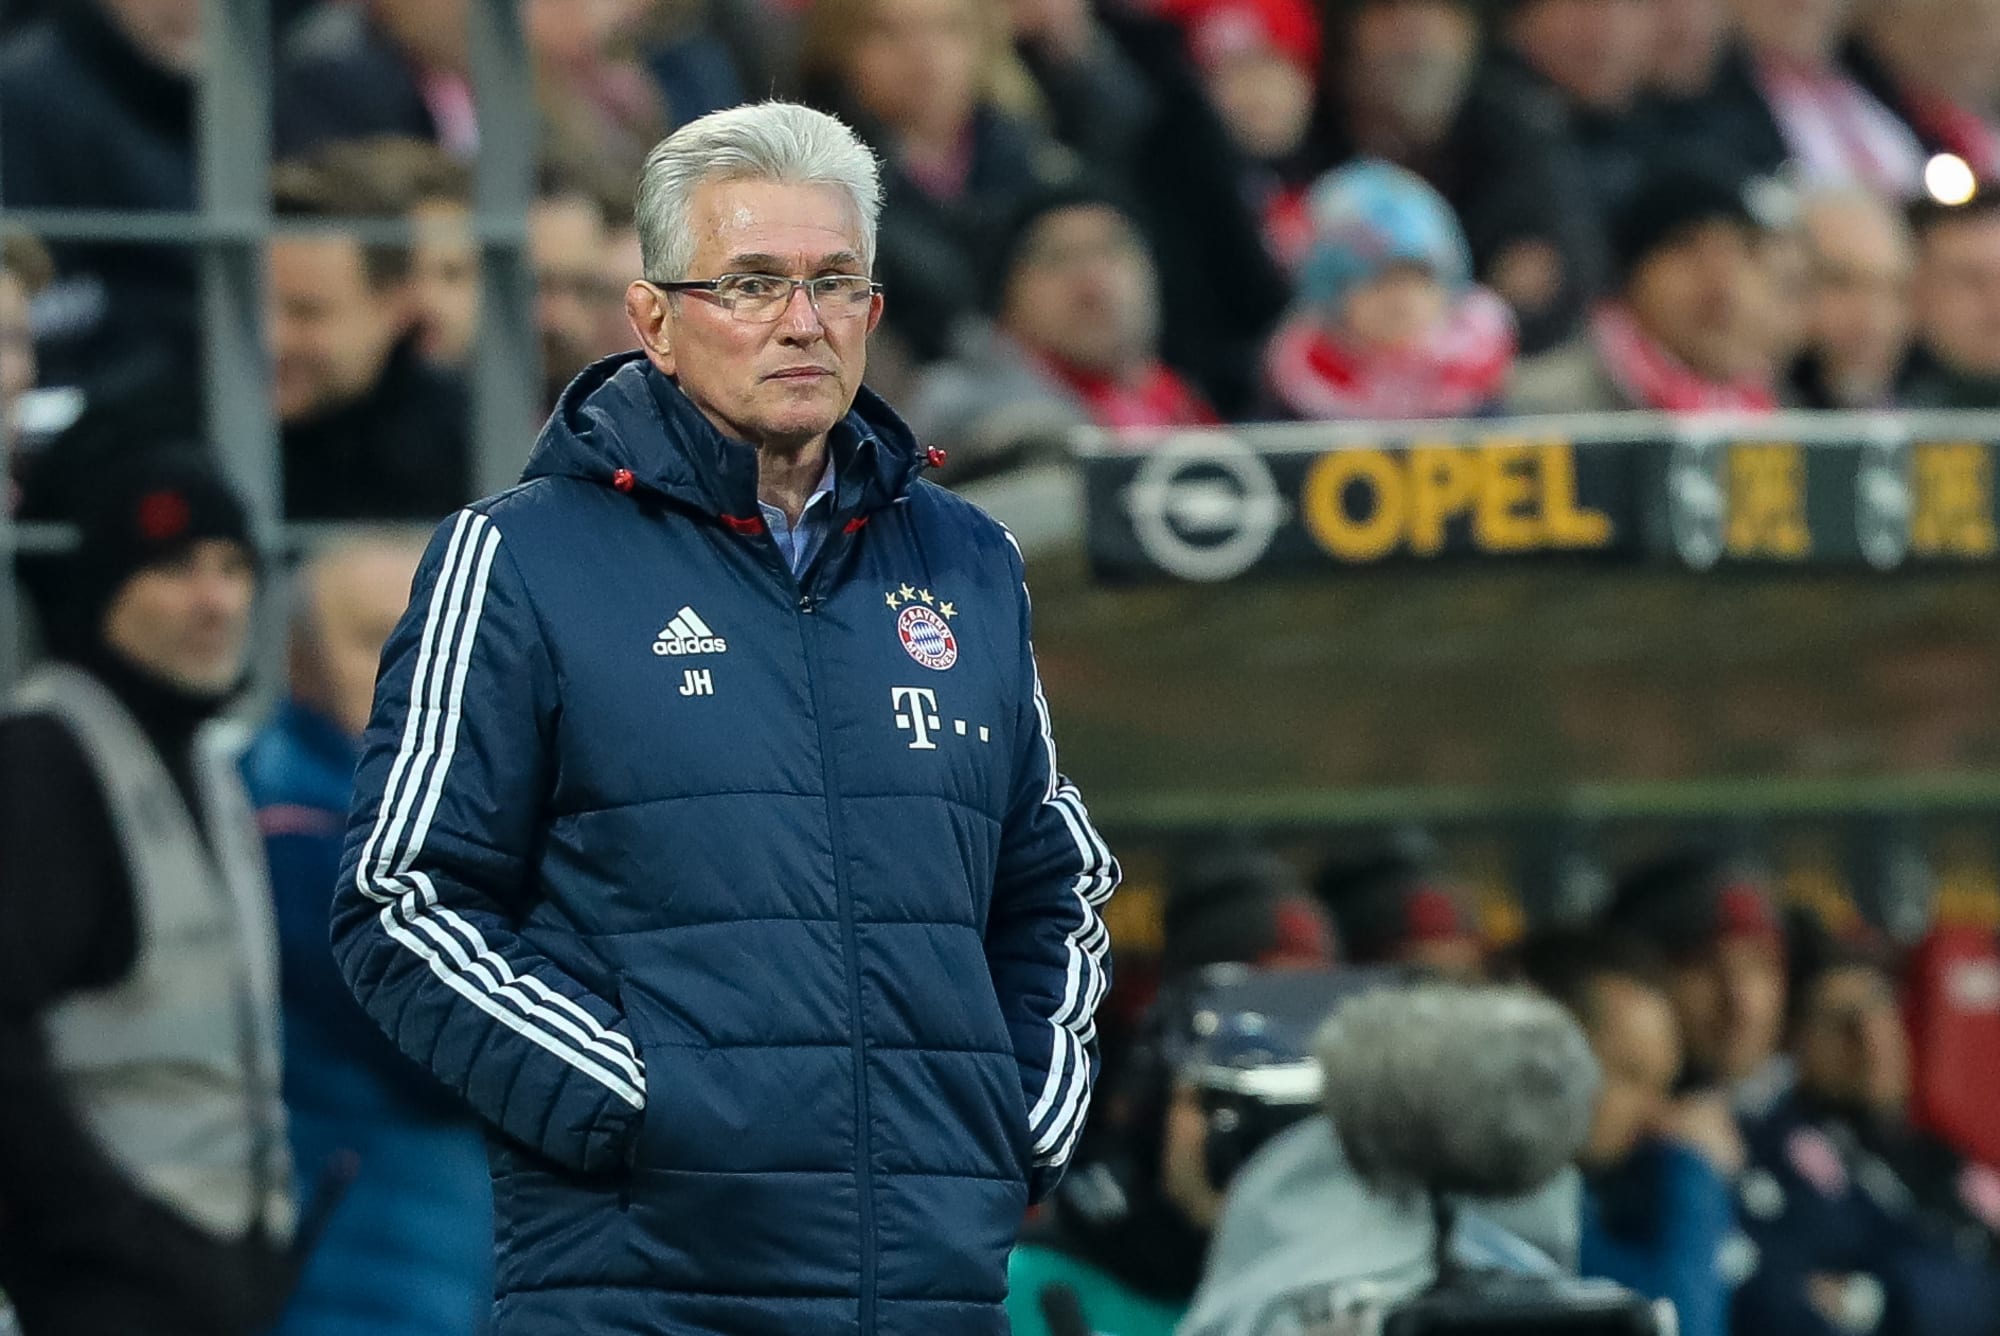 Bayern Munich manager Jupp Heynckes hints at his future successor